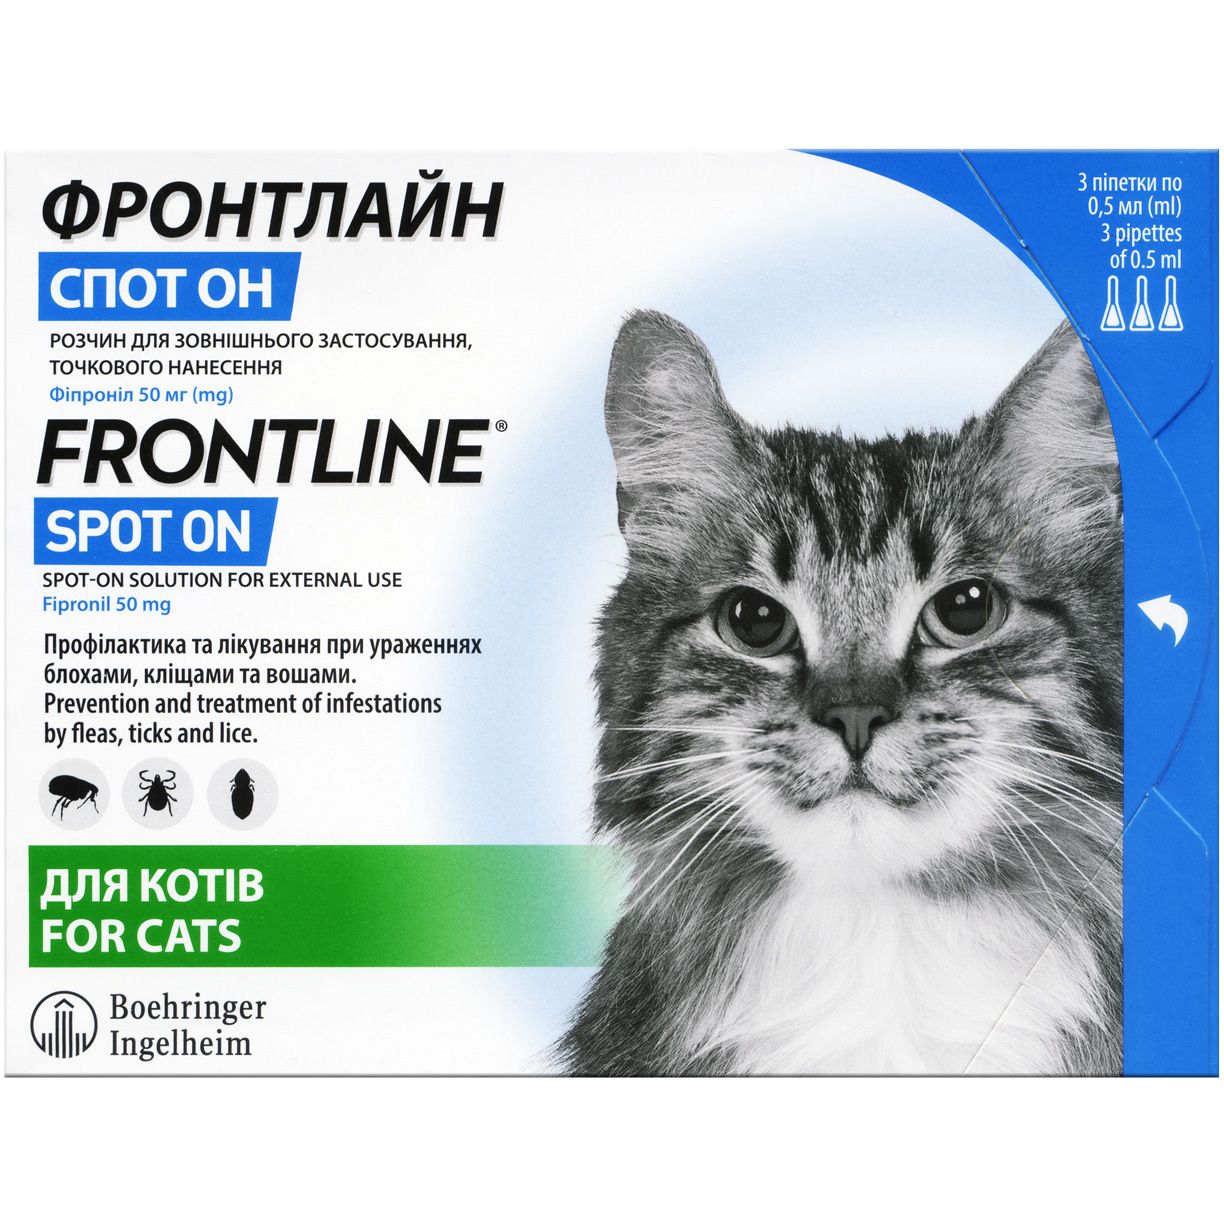 Капли Boehringer Ingelheim Frontline Spot On от блох и клещей для кошек от 1 кг 1.5 мл (3 шт. х 0.5 мл) (159921) - фото 1